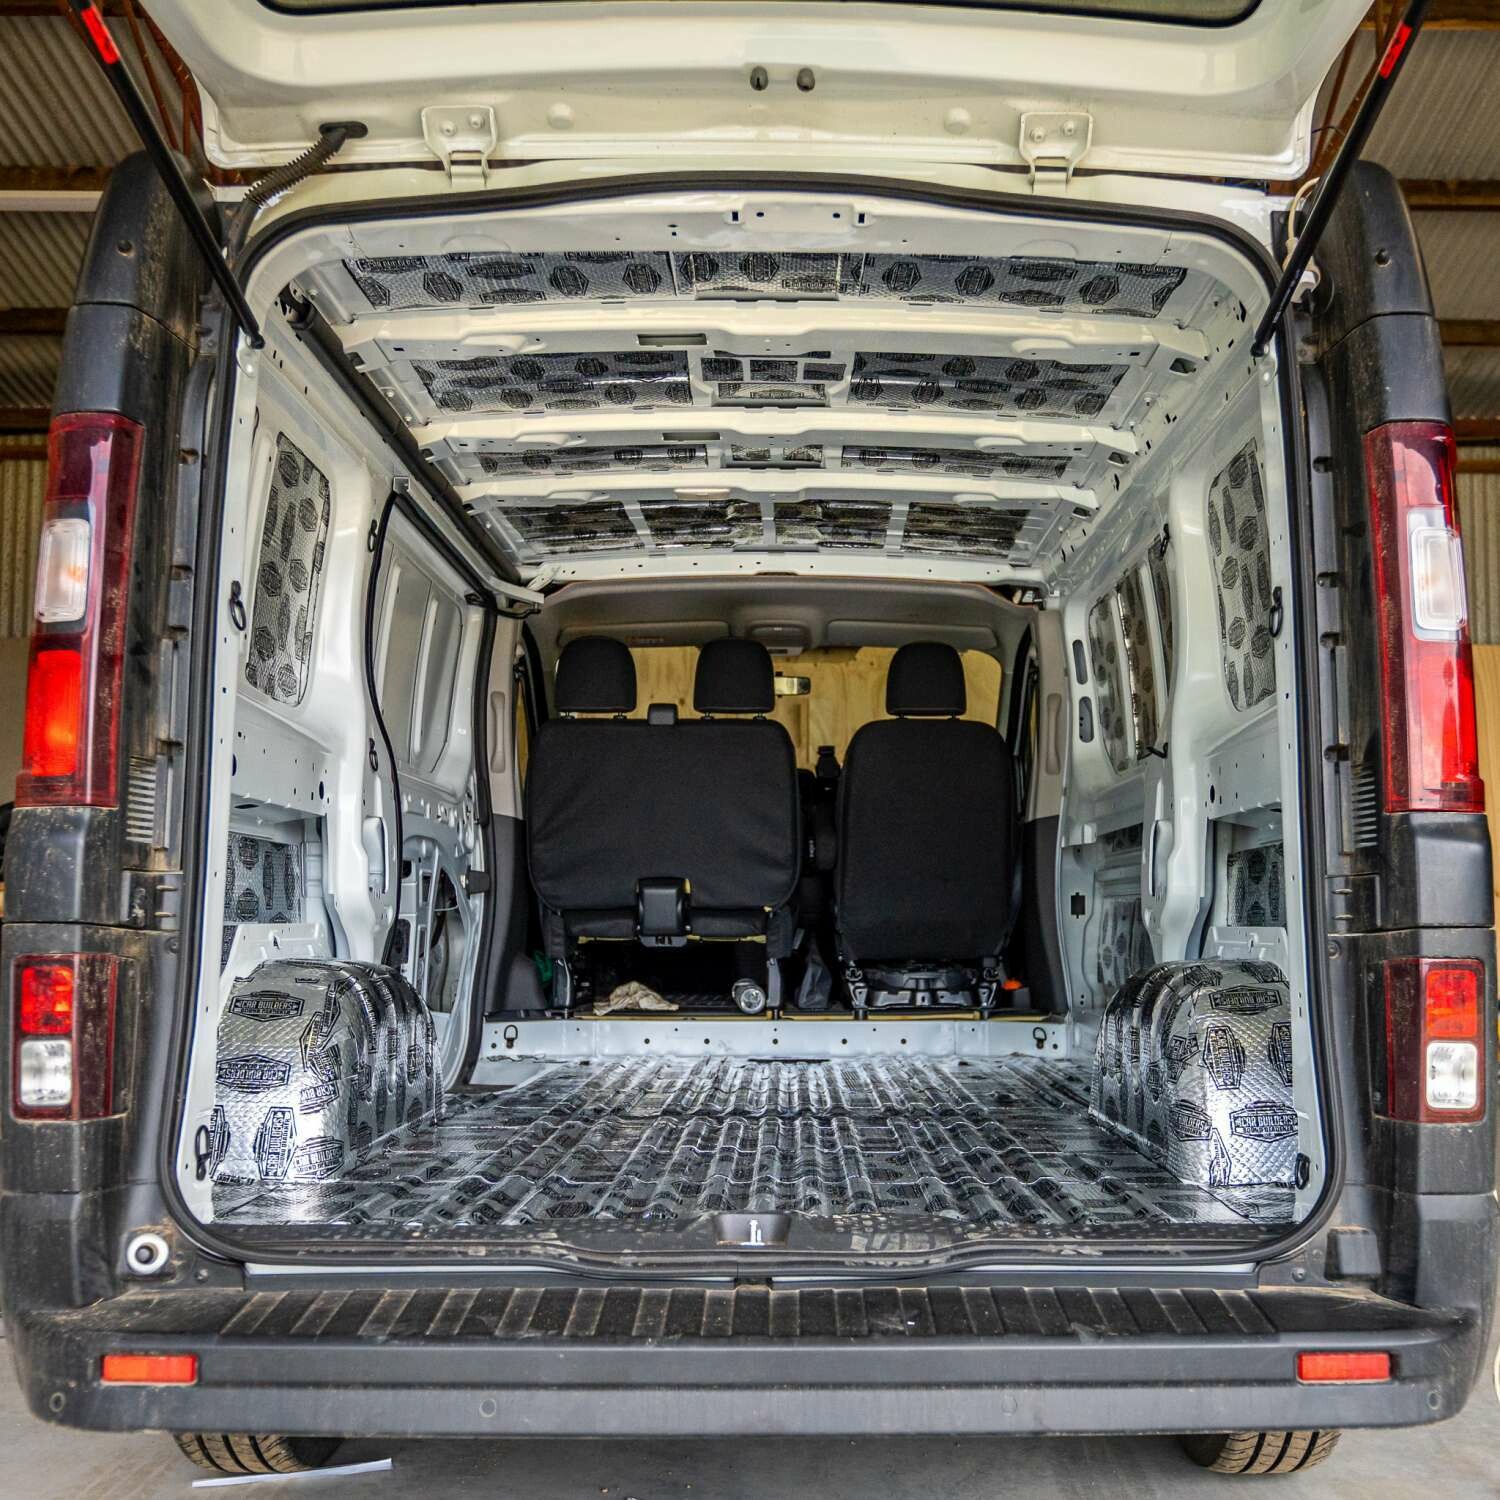 Premium standard sized SWB/LWB van sound deadening and insulation